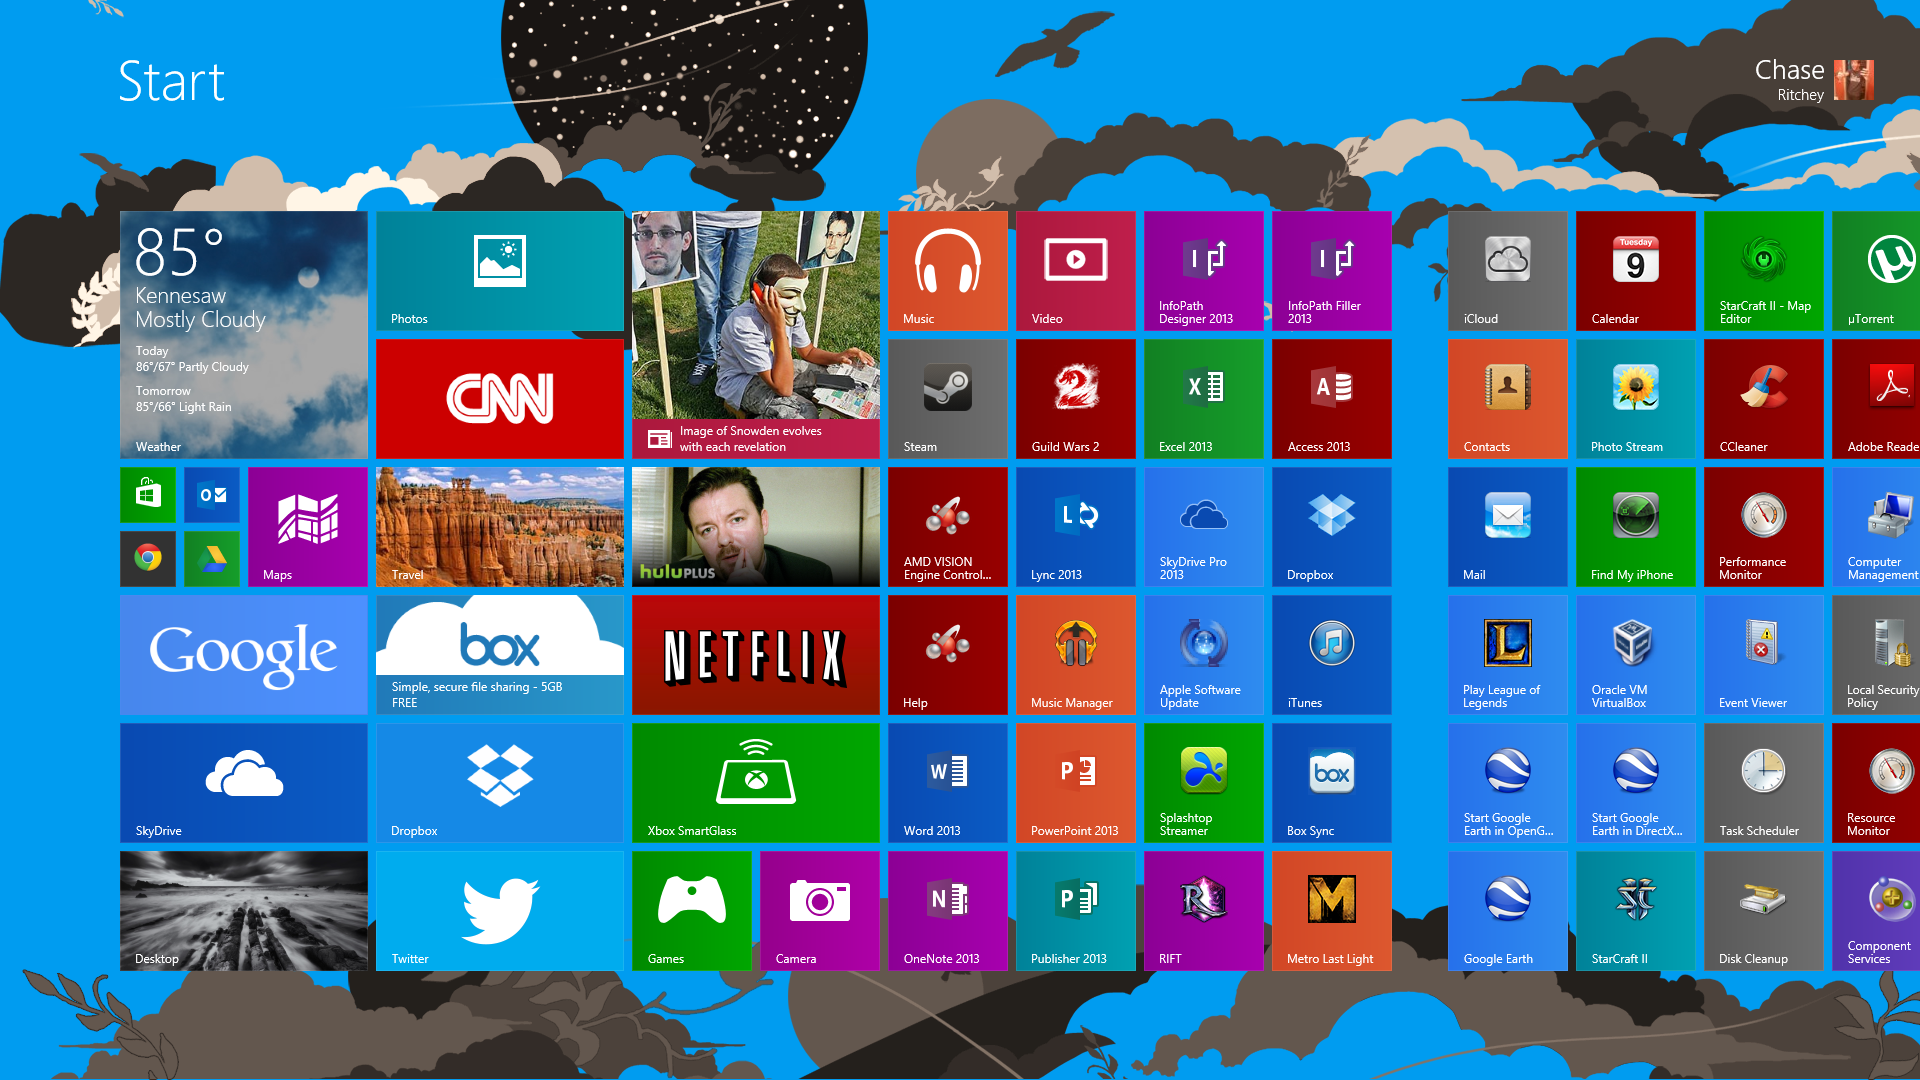 Windows 8.1 allows more customization